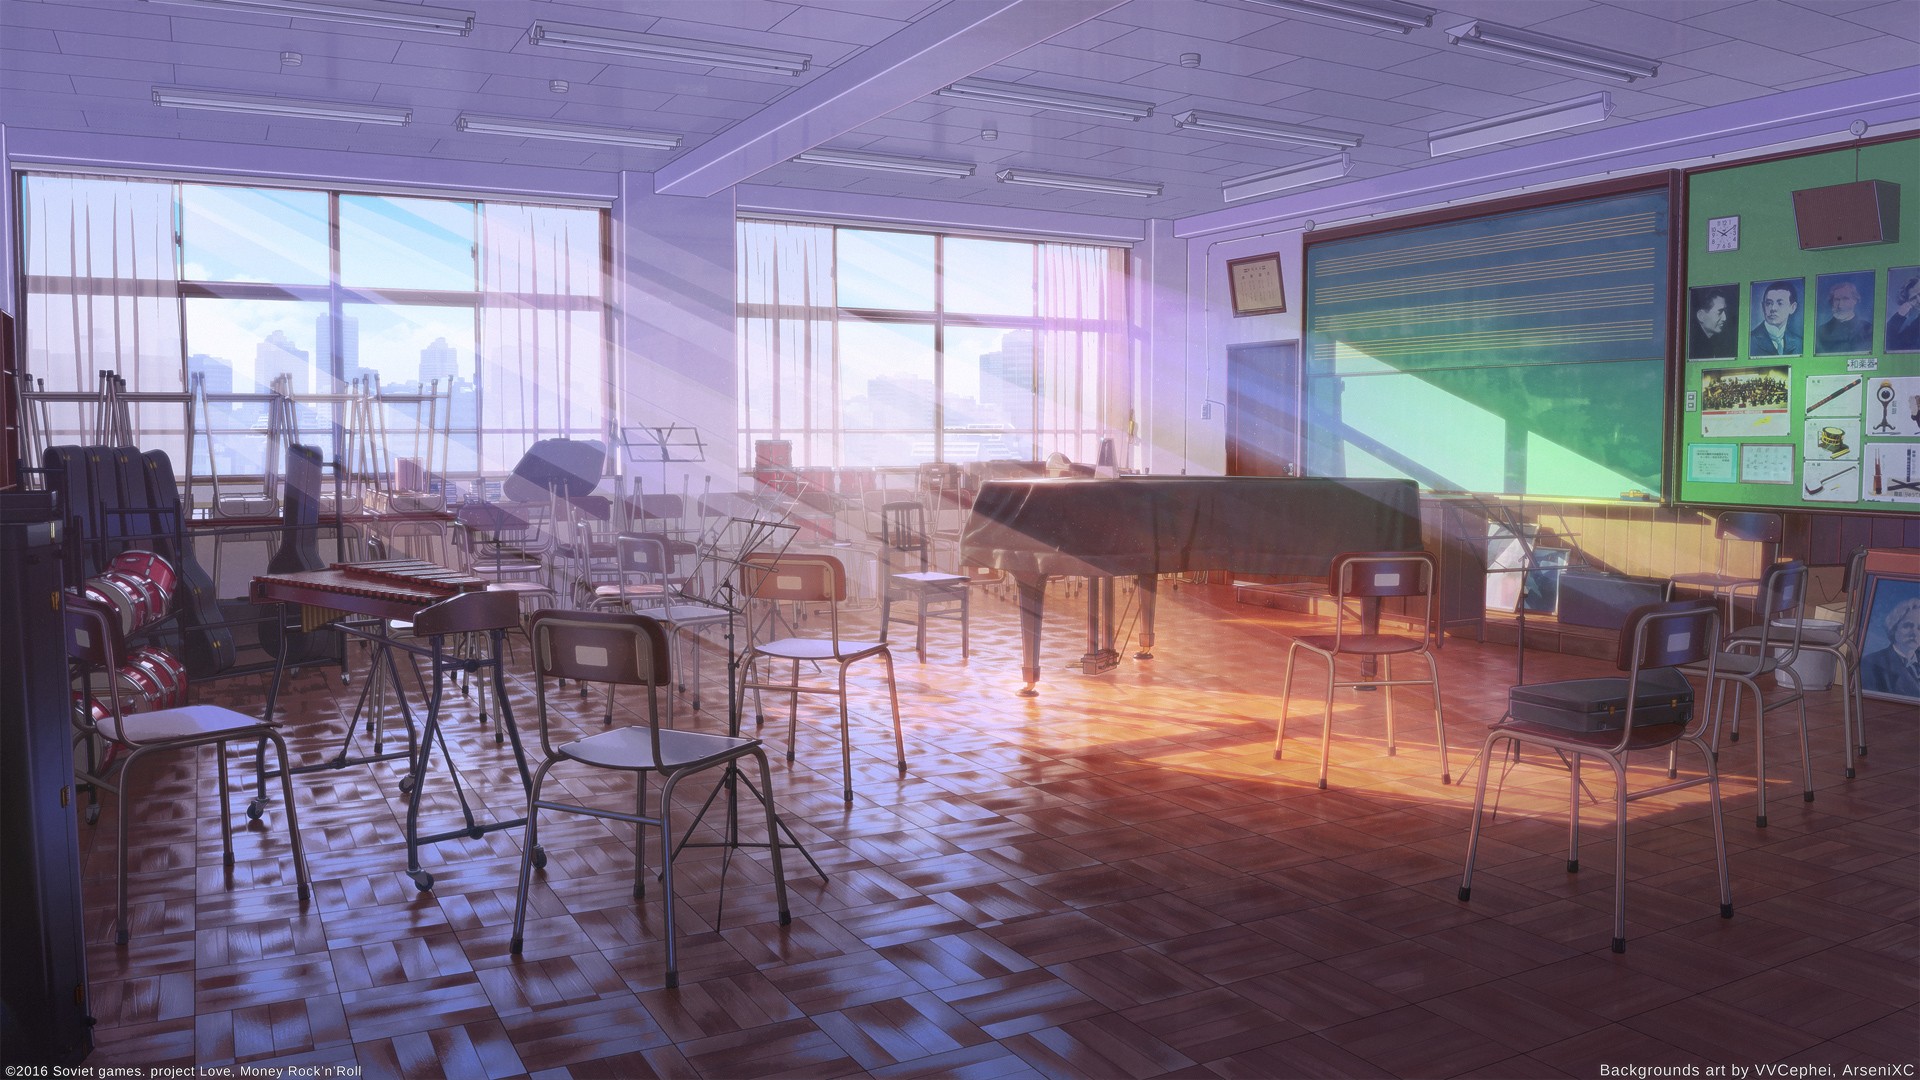 General 1920x1080 classroom realistic window ArseniXC watermarked interior musical instrument drums chalkboard sunlight chair floor ceiling 2016 (year) curtains school digital art VVCephei